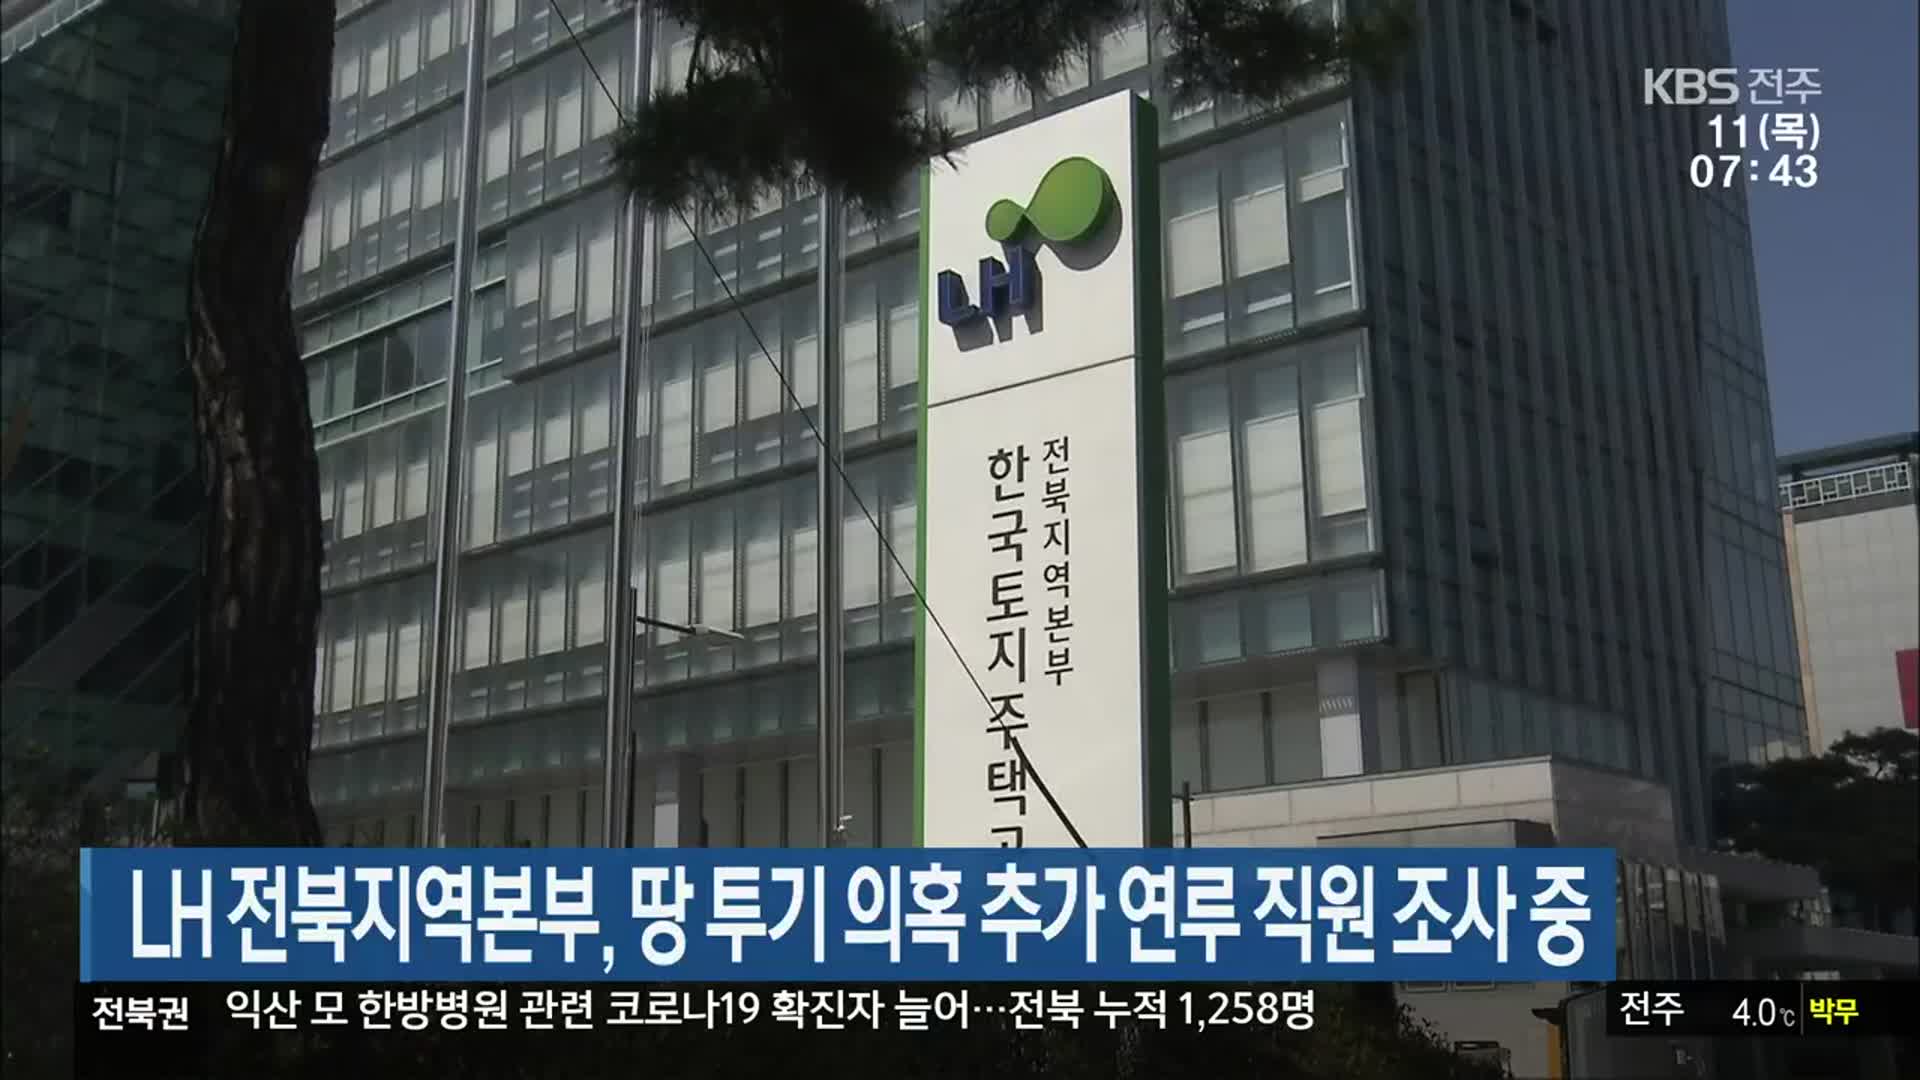 LH 전북지역본부, 땅 투기 의혹 추가 연루 직원 조사 중